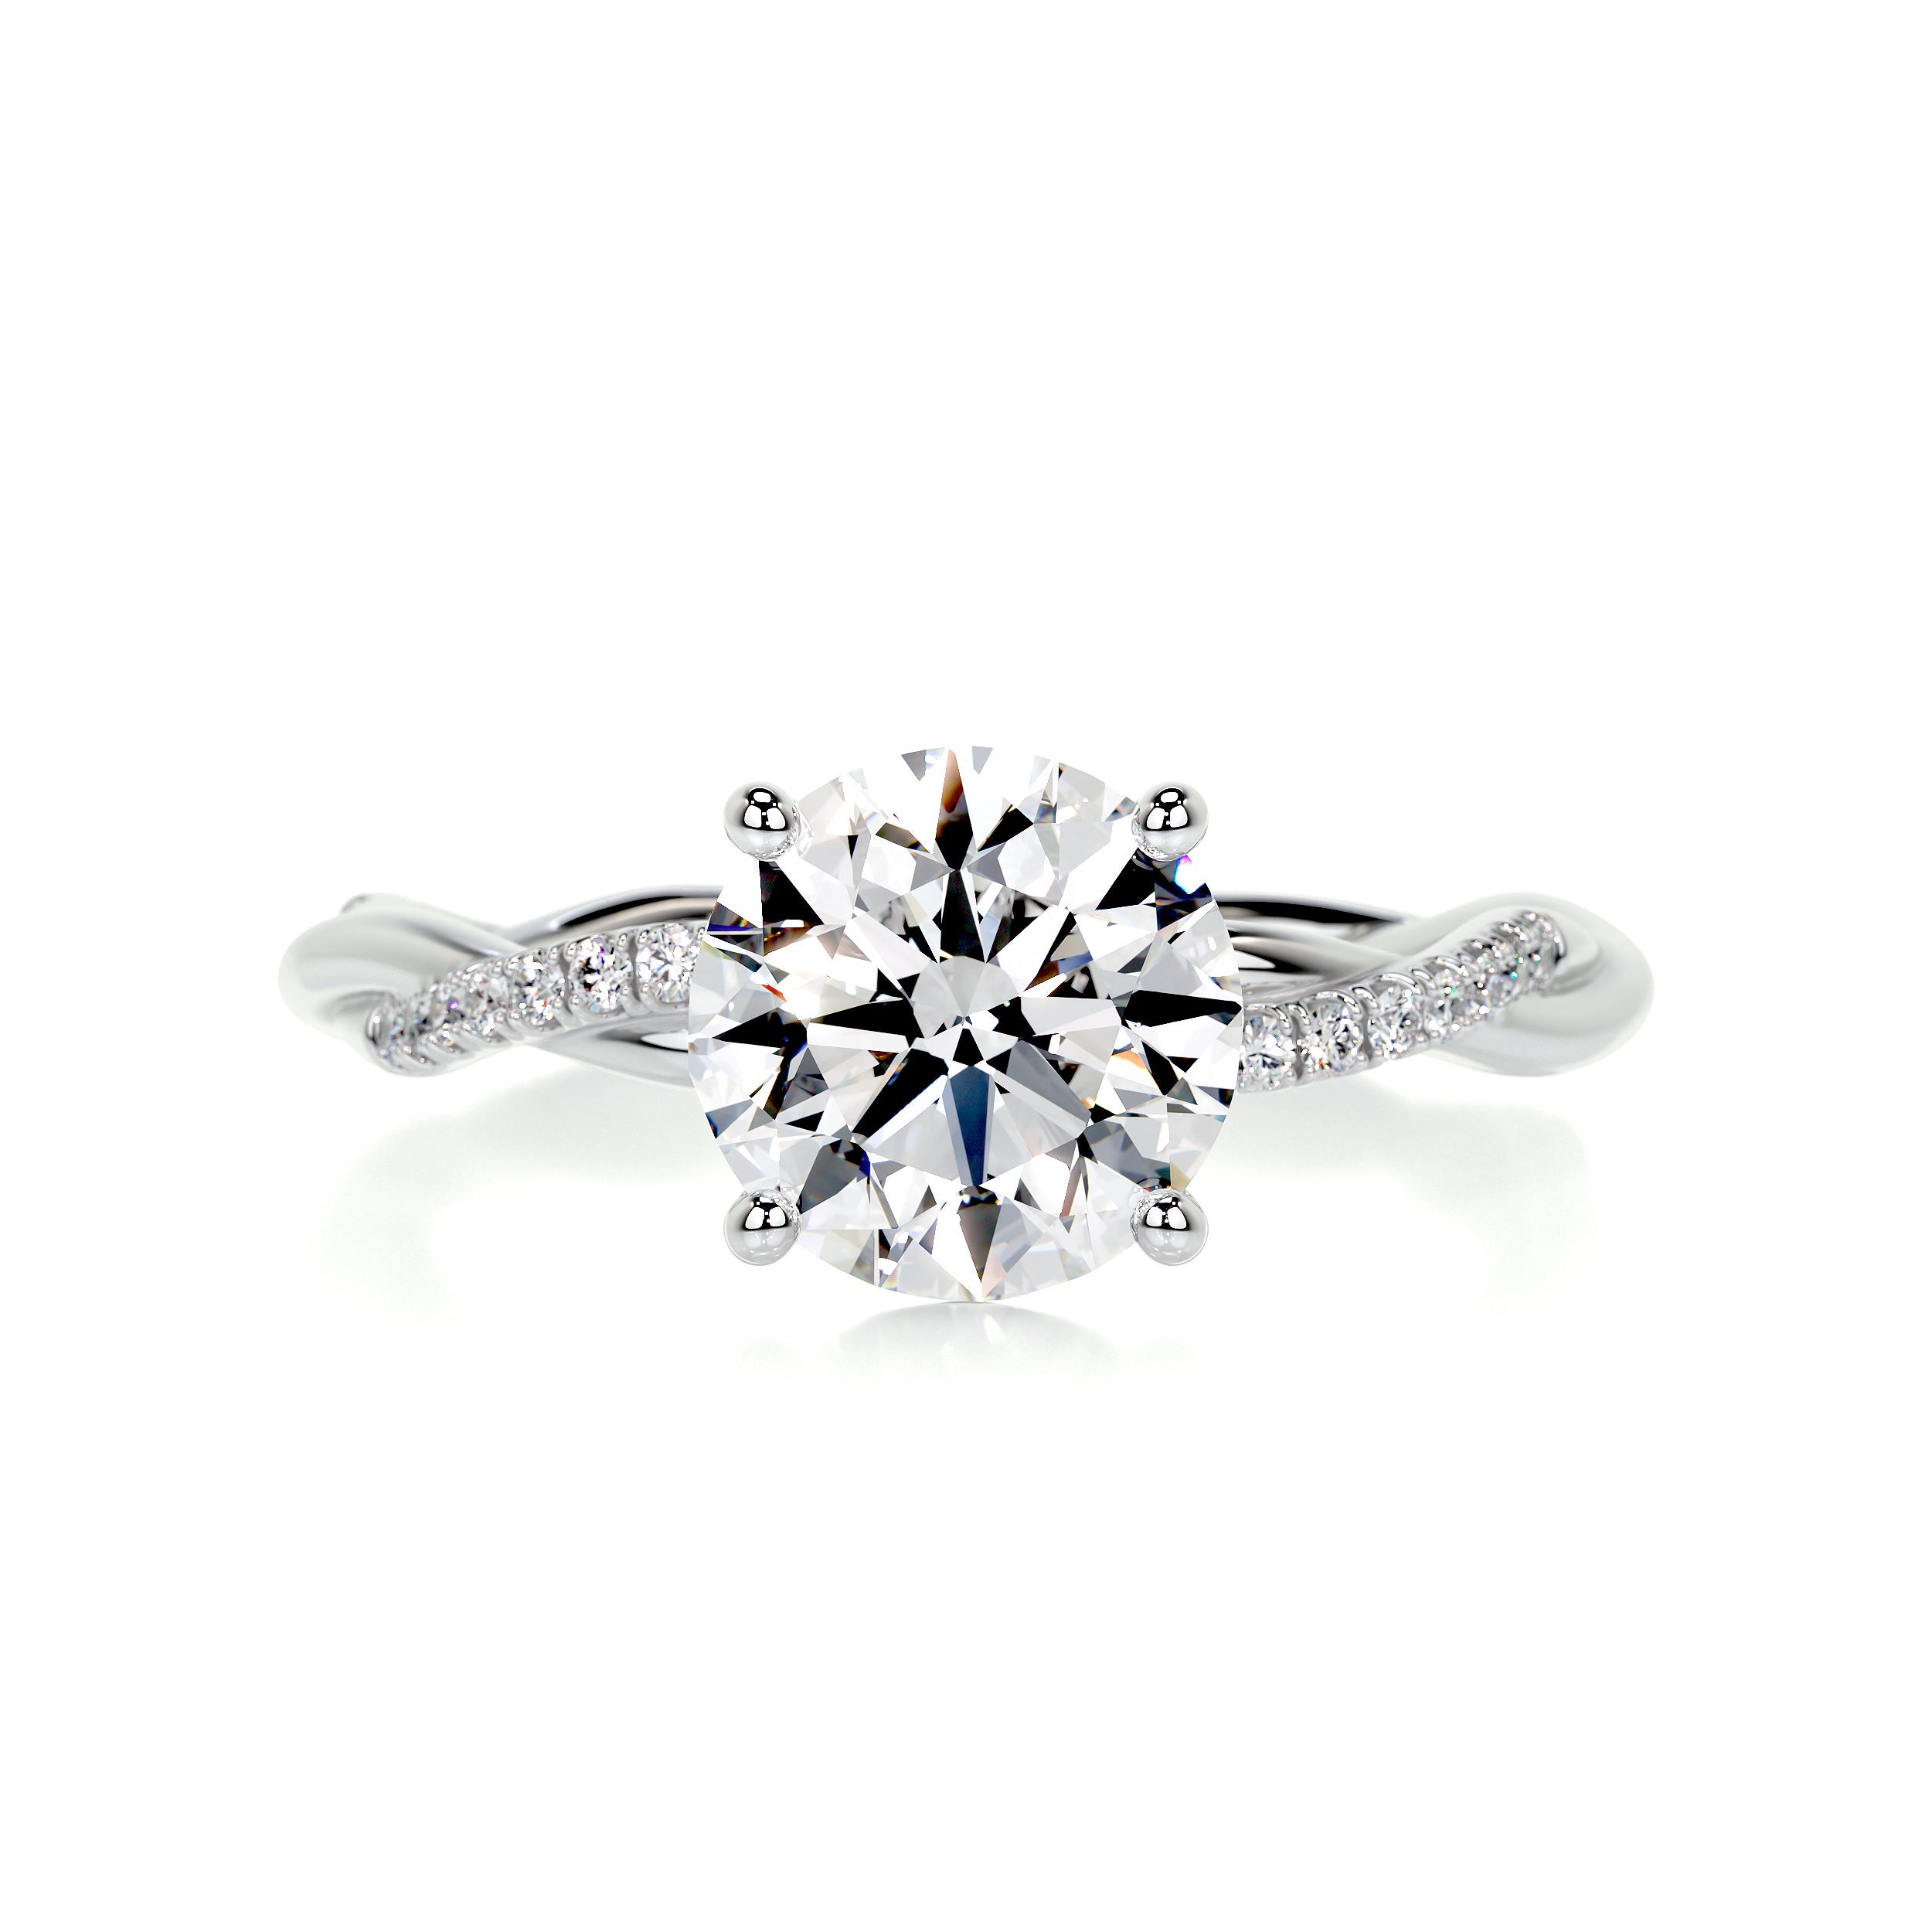 Crystal Diamond Engagement Ring   (1.8 Carat) -Platinum